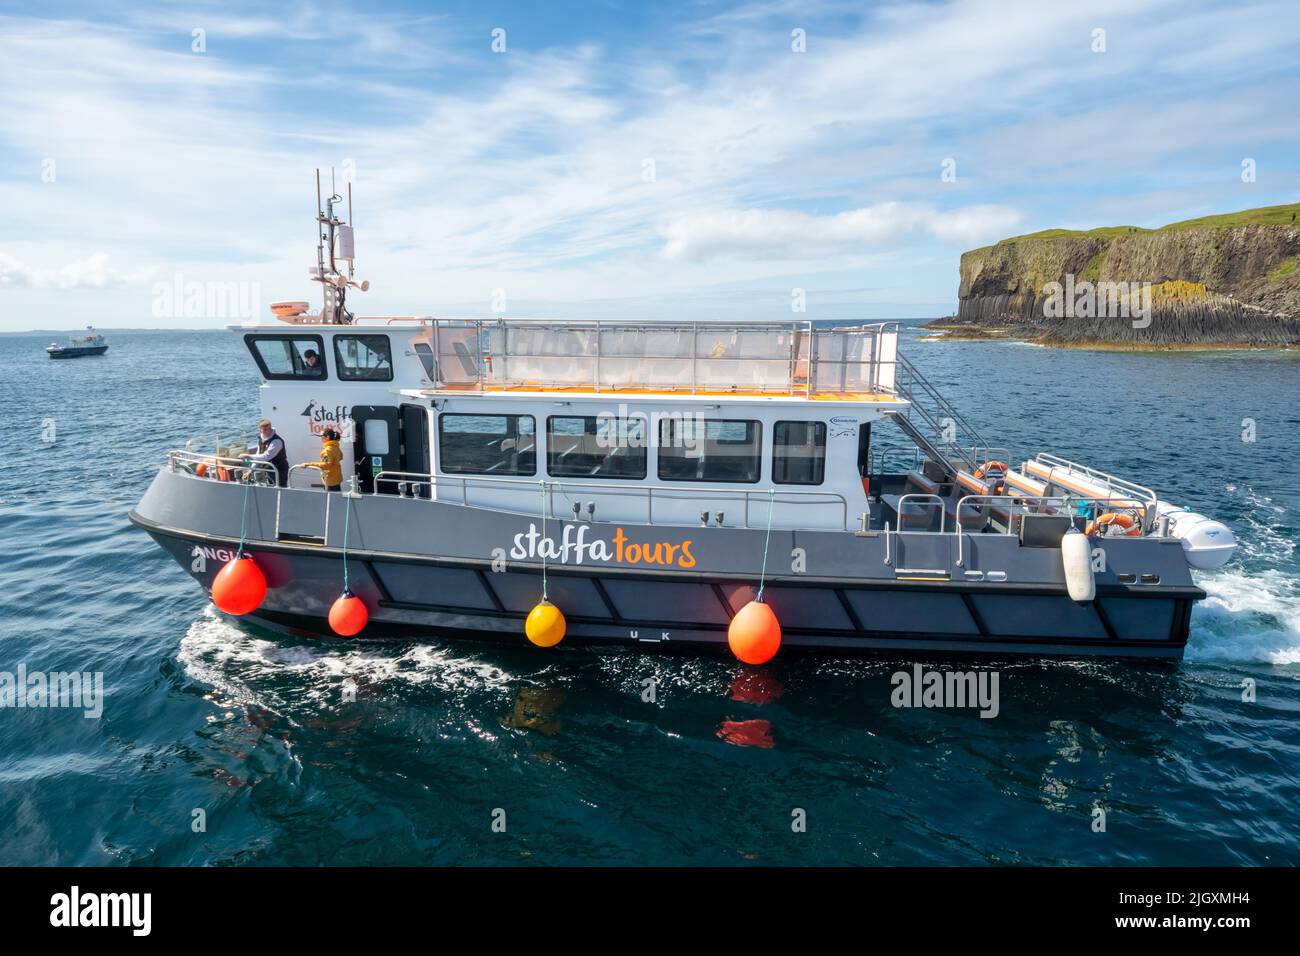 Staffa tours boat Angus off the coast of Staffa, Scotland, UK Stock Photo